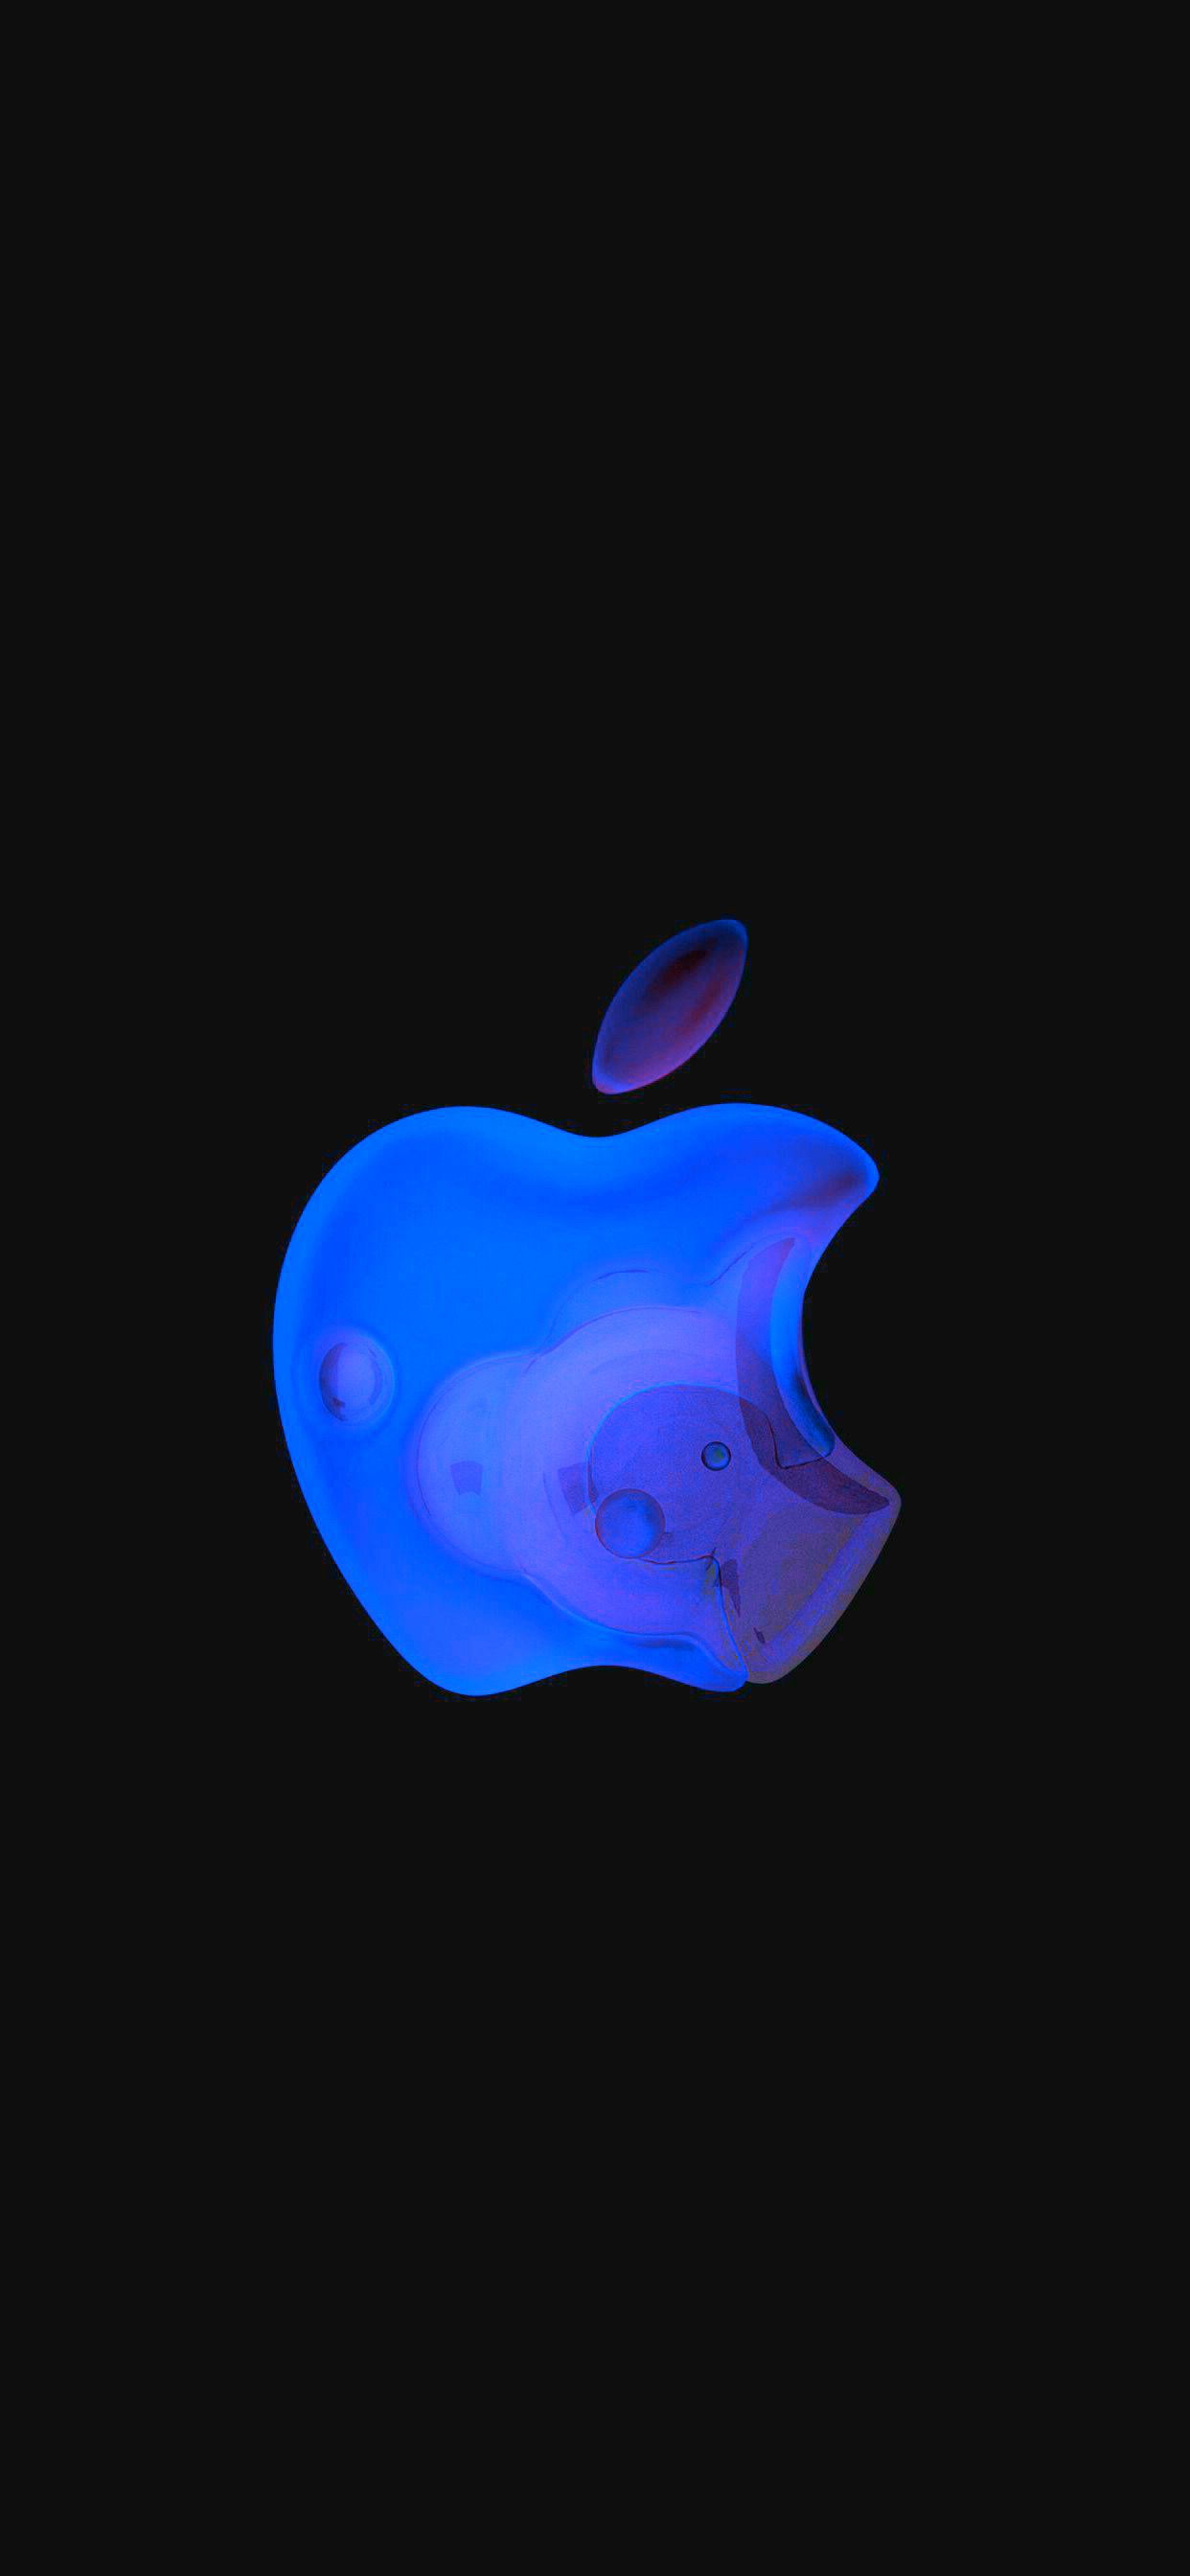 applelogo #appleiphone #appleipad #iOS13 #iphonewallpaper. Apple wallpaper iphone, Apple logo wallpaper, Apple logo design